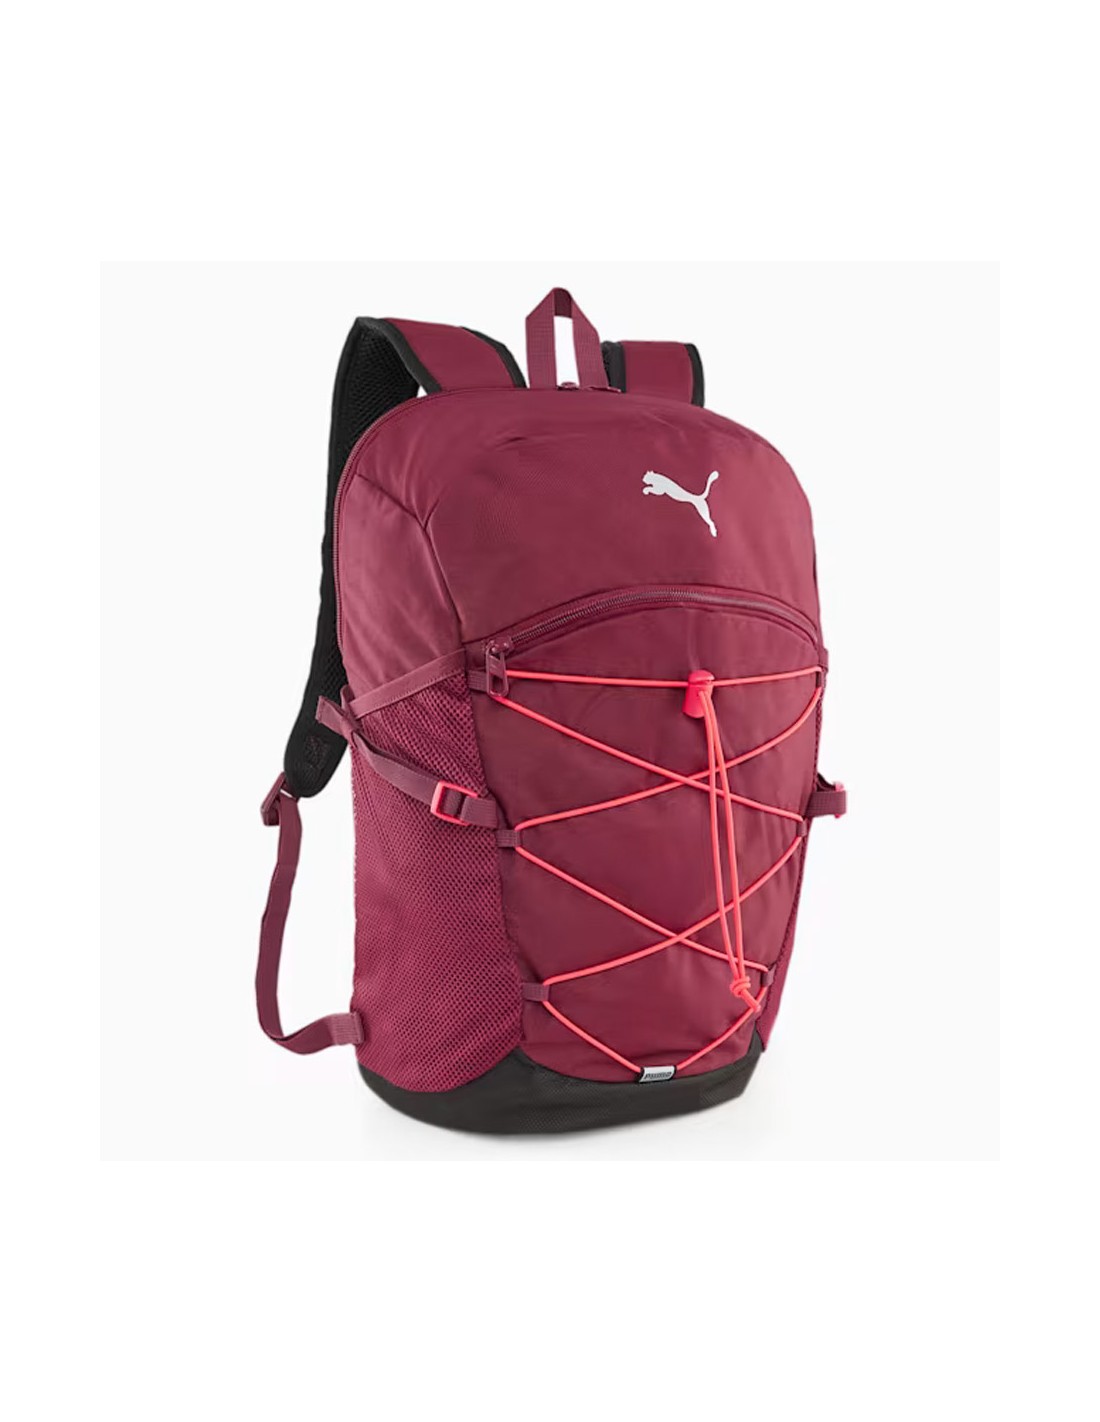 Plus Pro Puma Backpack 07952107